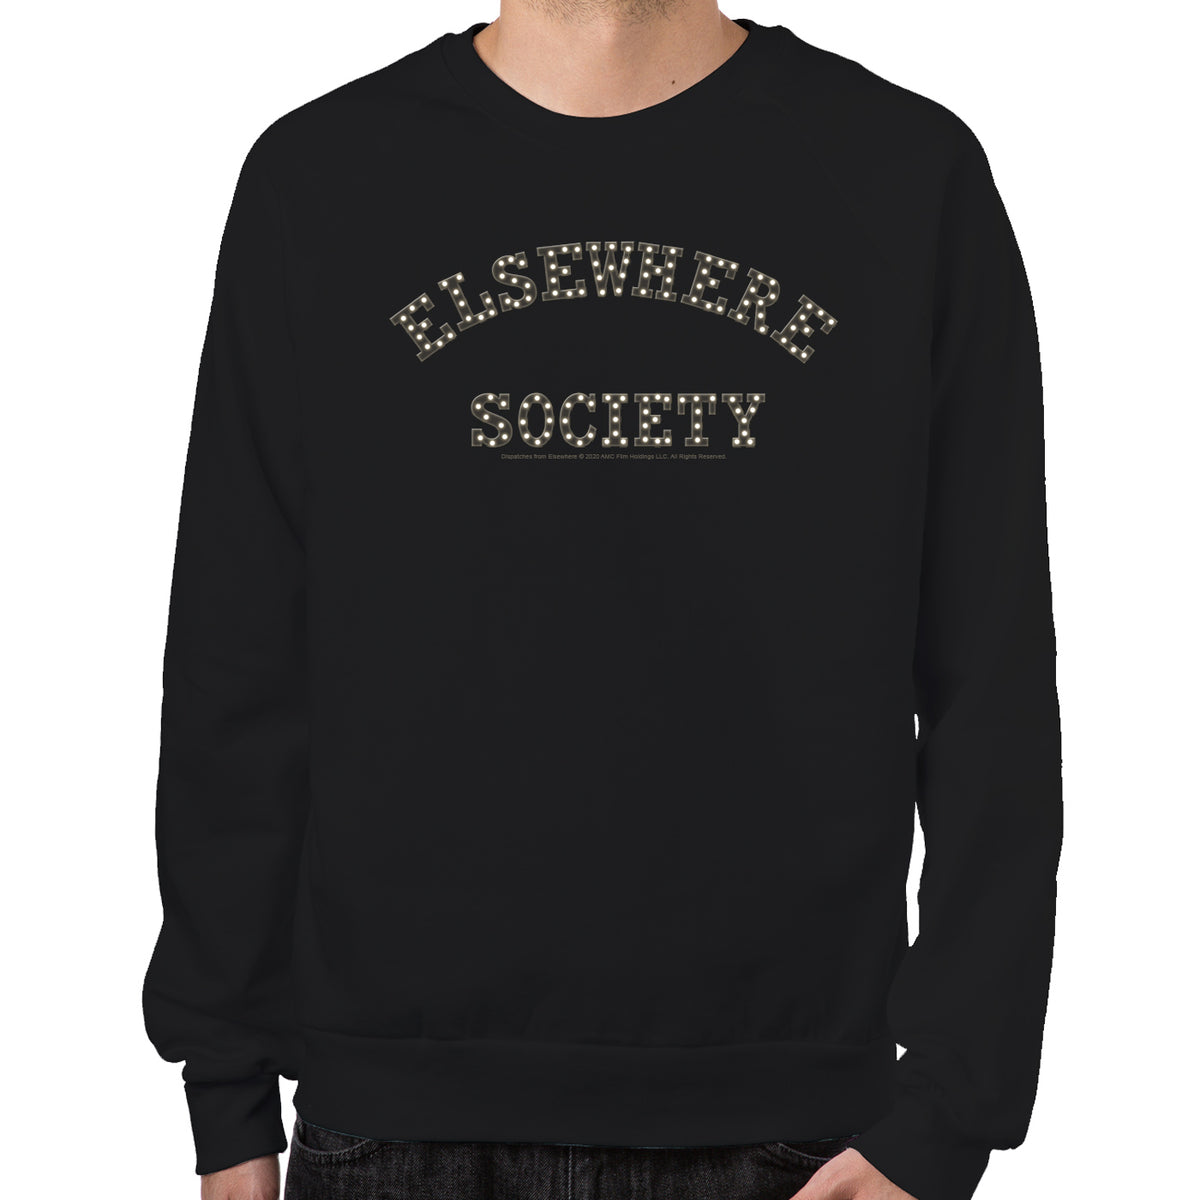 Elsewhere Society Sweatshirt